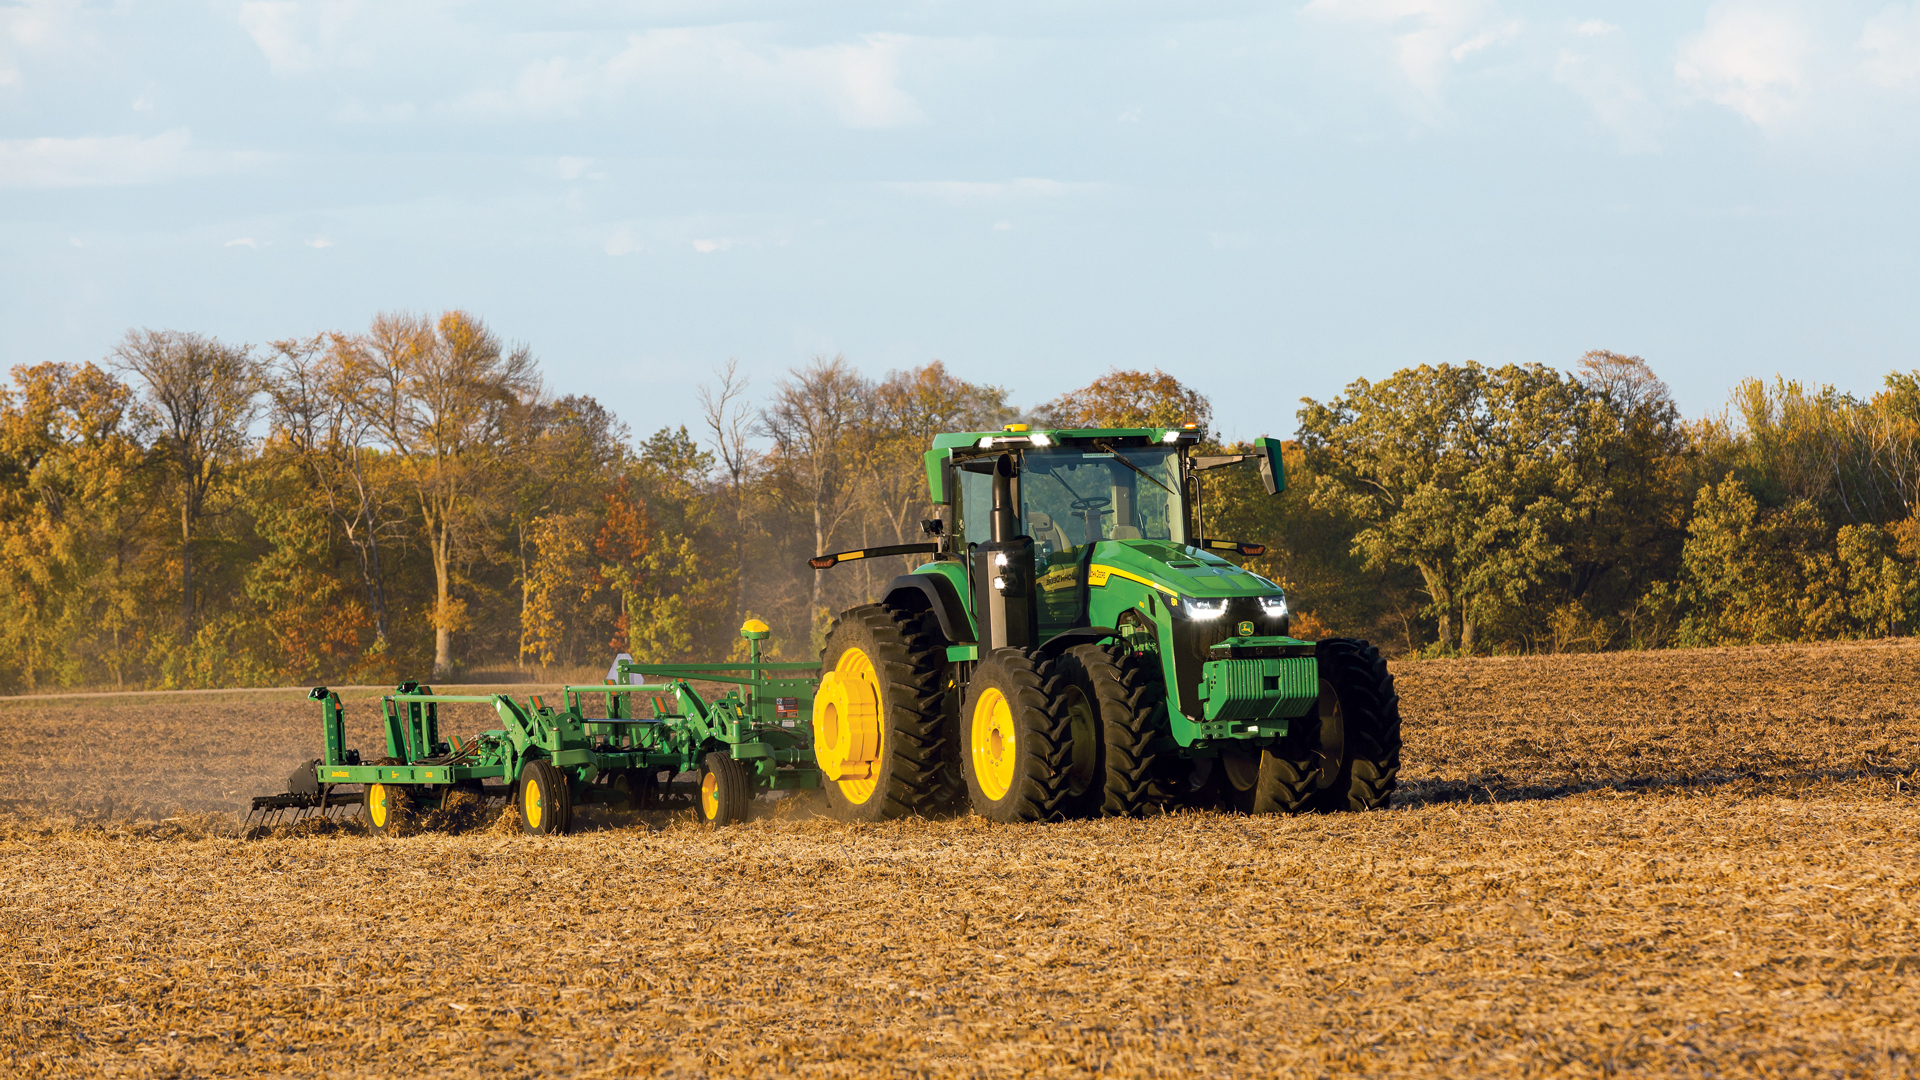 John Deere reveals fully autonomous tractor